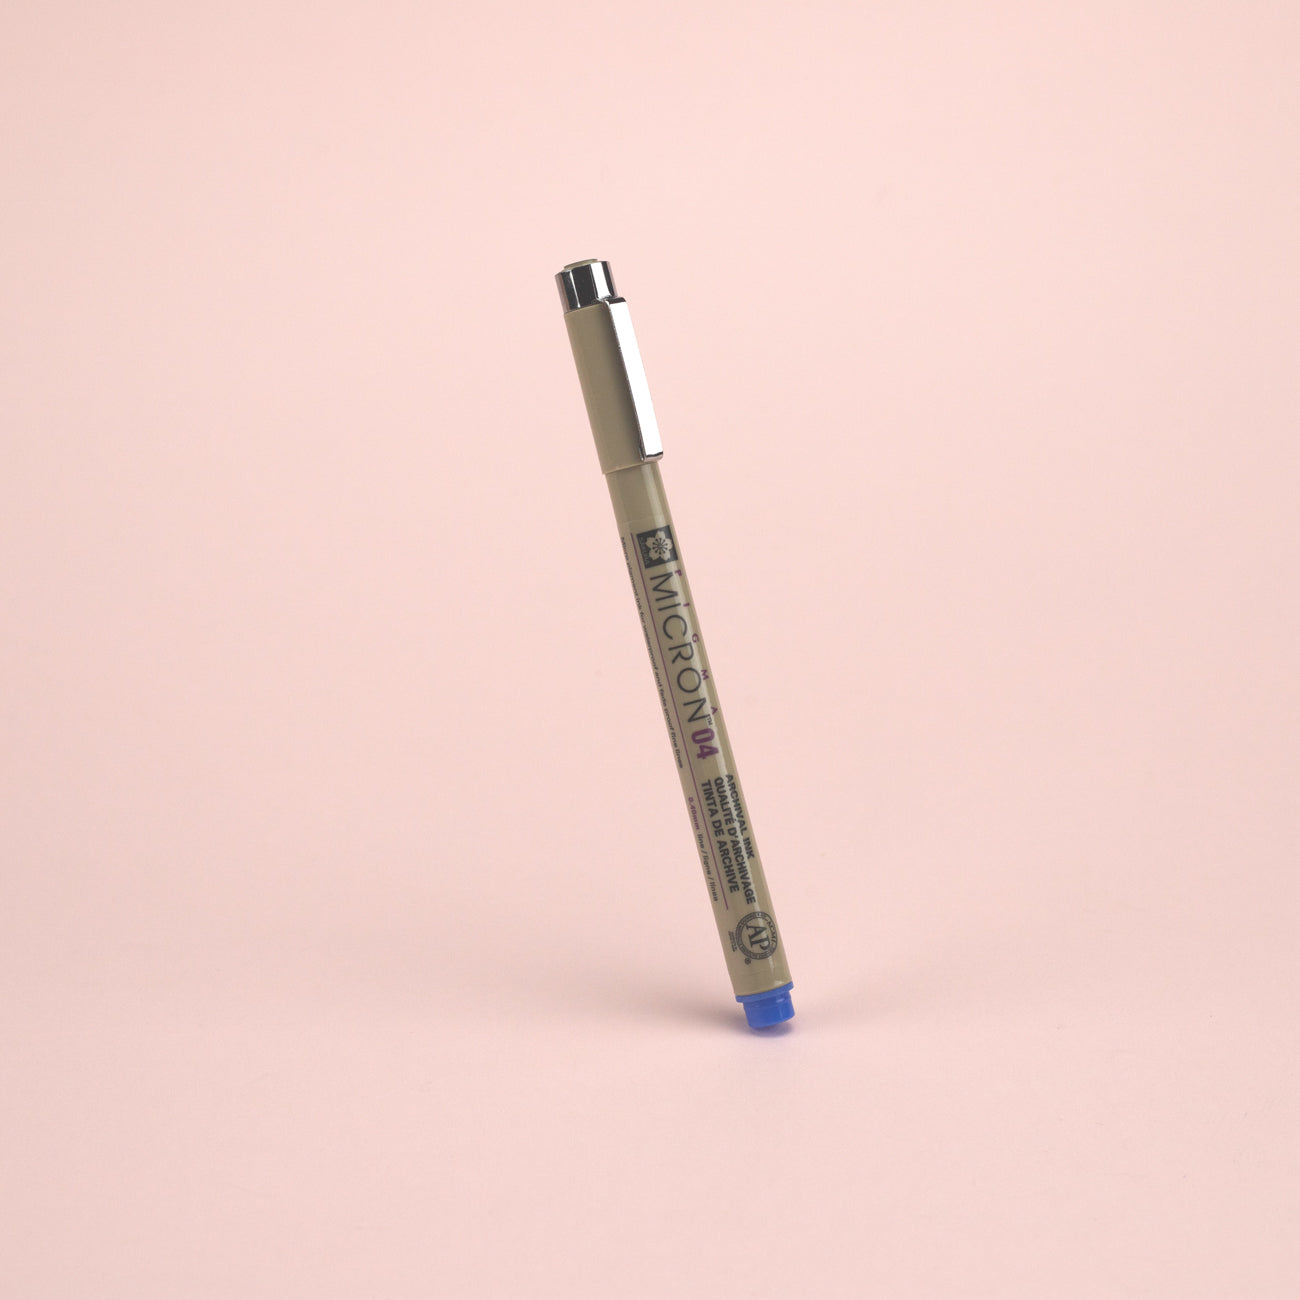 Pigma Micron 05 Fineliner Pen, 0.45 mm, Blue